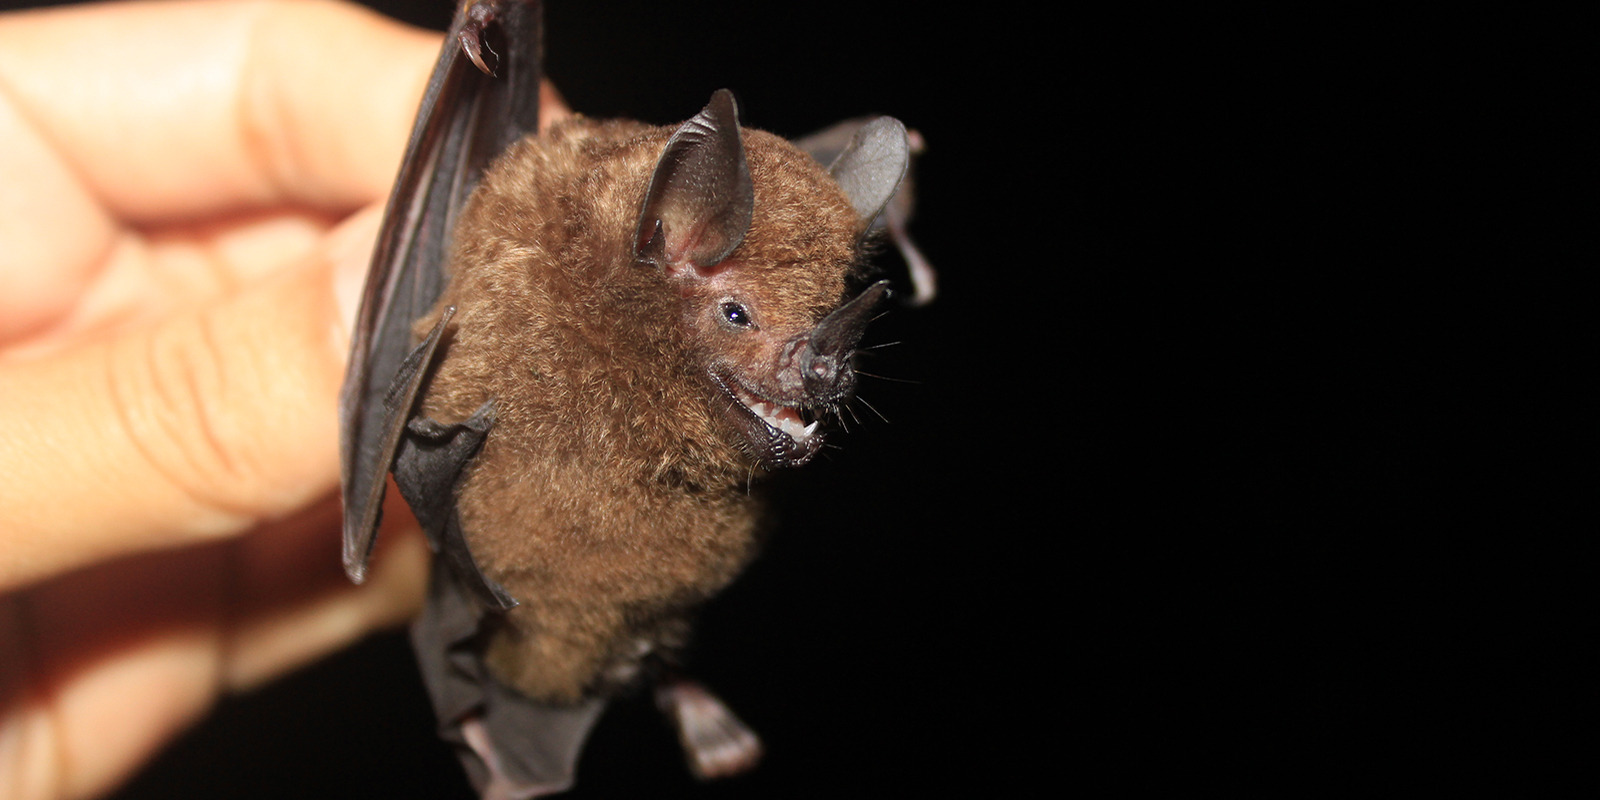 A close up view of the Carollia castanea bat